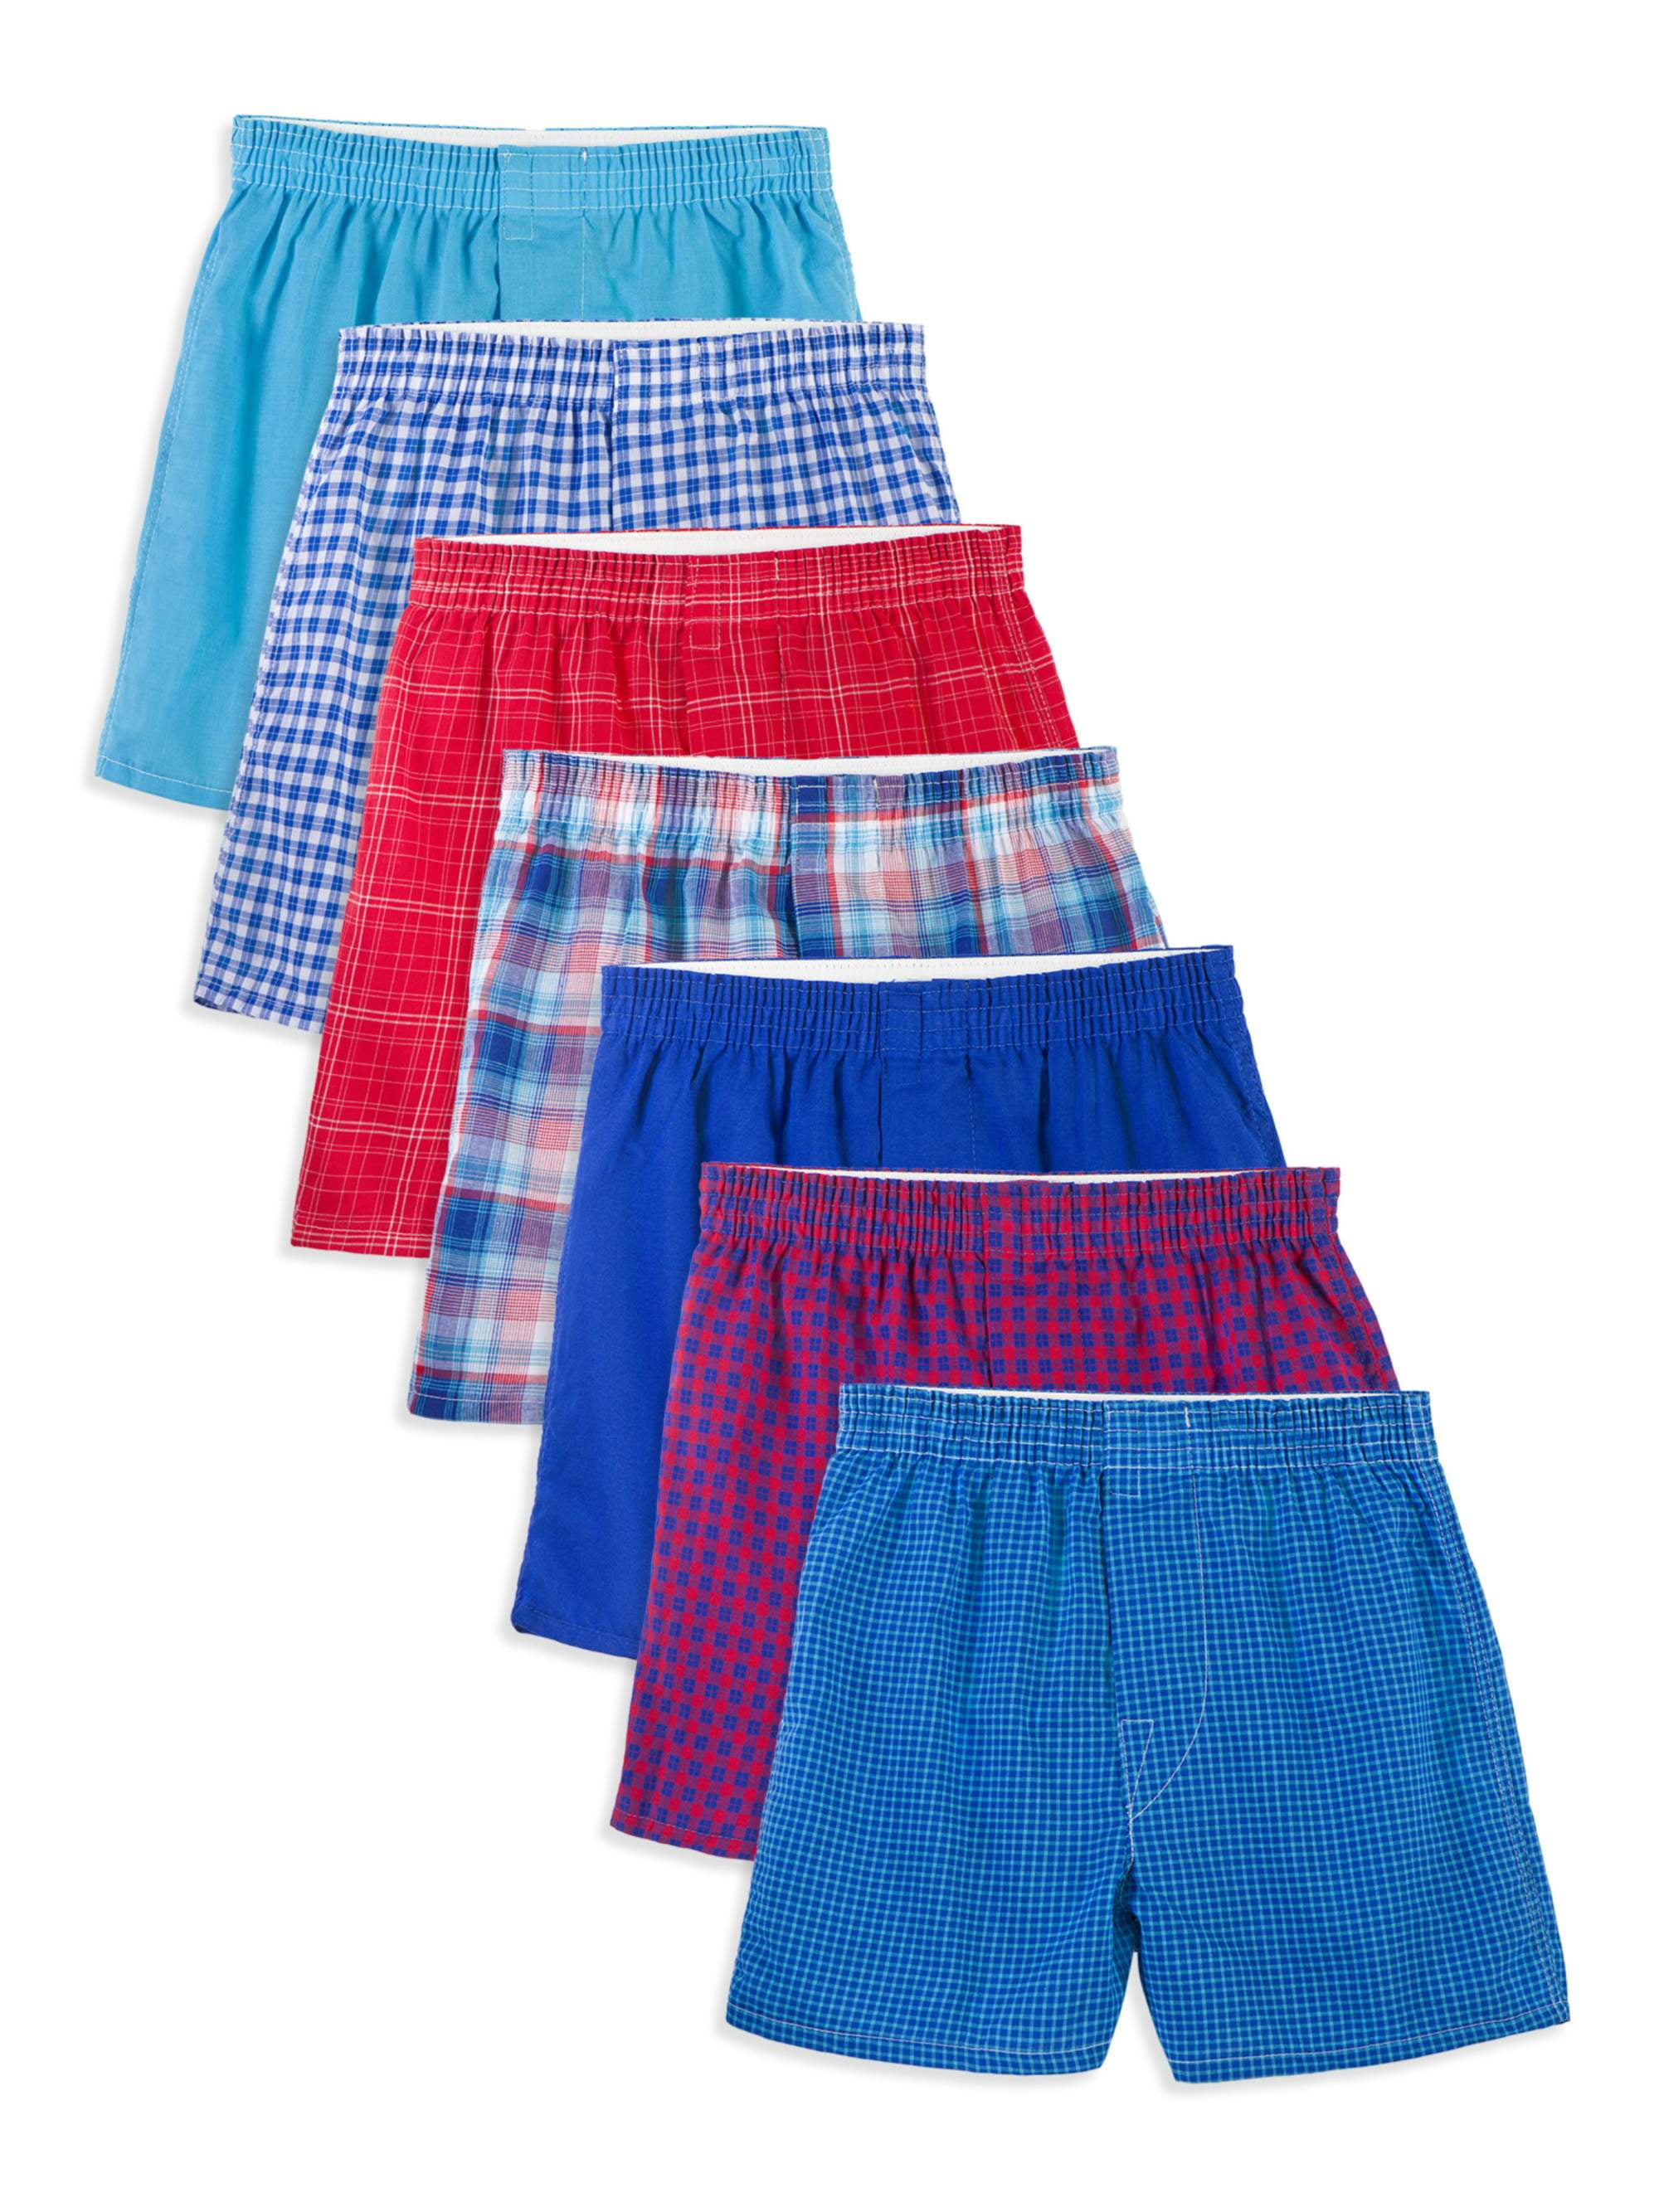 Fruit of the Loom Boys Underwear, 7 Pack Assorted Tartan Plaid Boxers ...